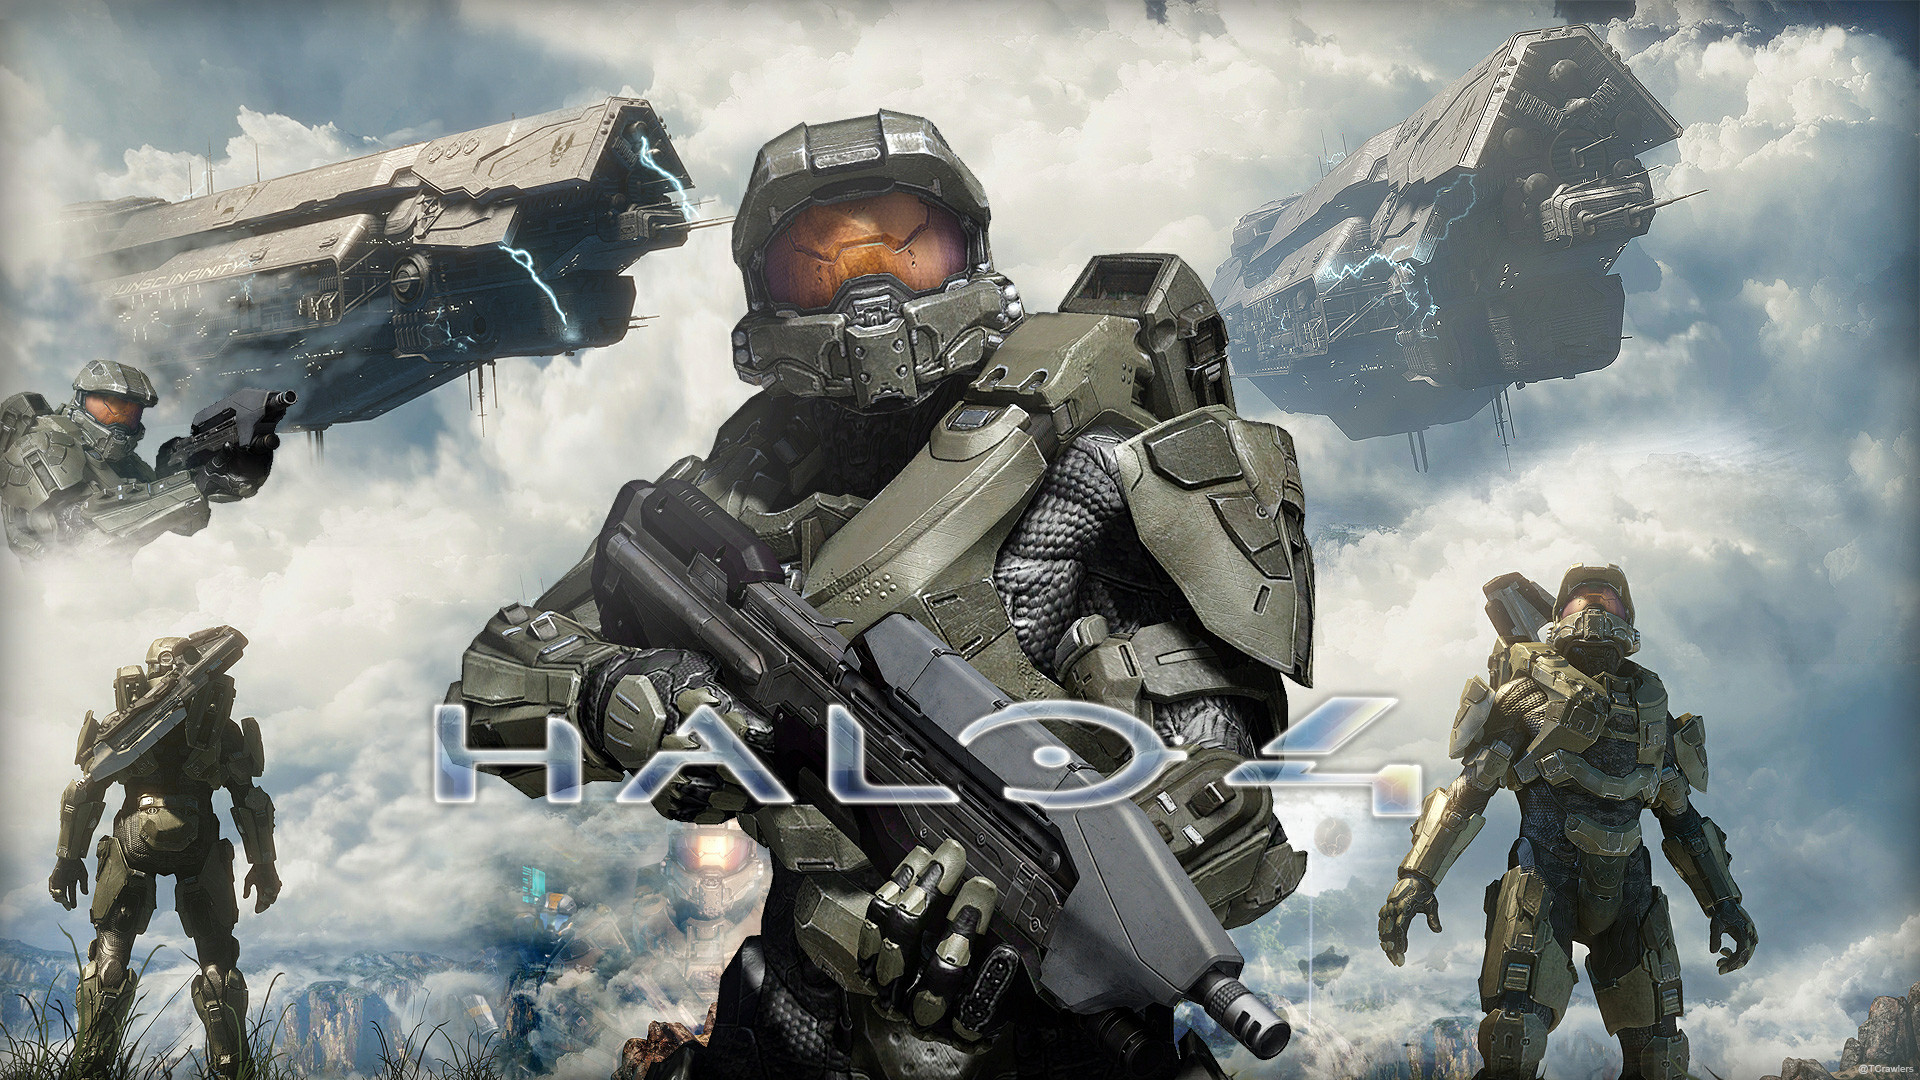 Awesome Halo Wallpaper - Halo 4 - HD Wallpaper 